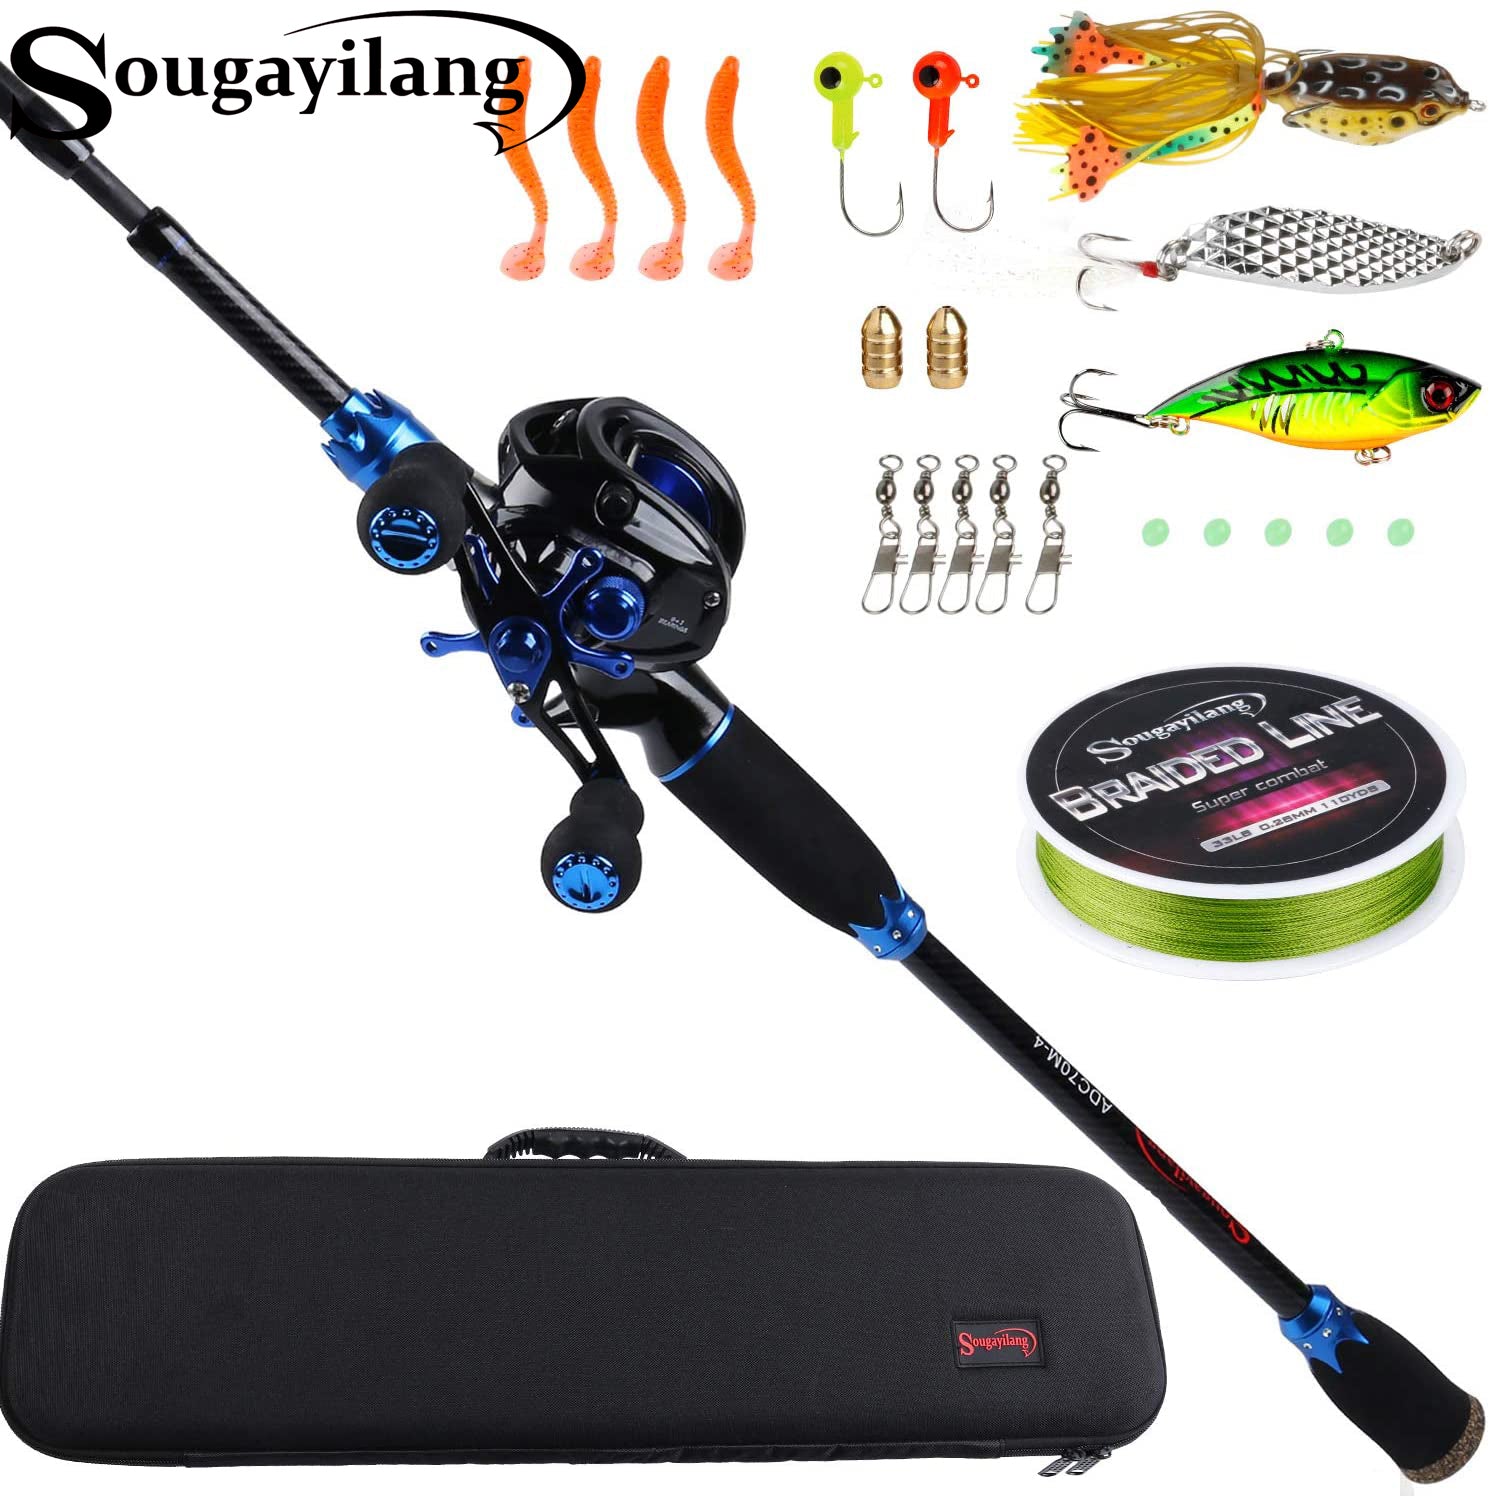 Sougayilang Fishing Rod and Reel Combos,24-Ton Carbon Fiber Fishing P